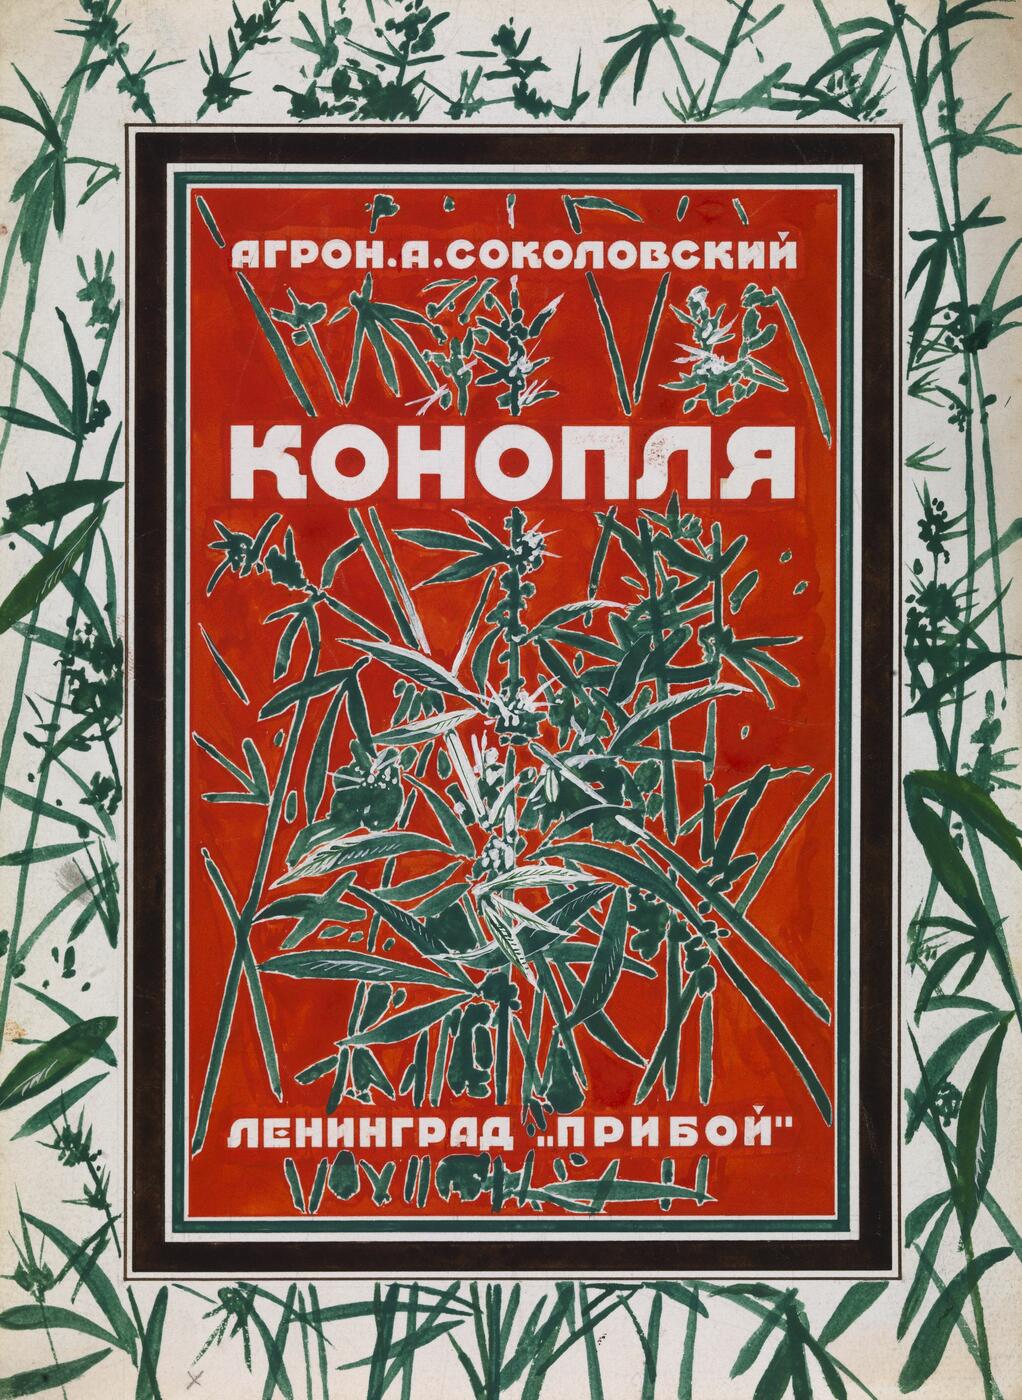 Cover Design for a Book on Hemp by A. Sokolovski